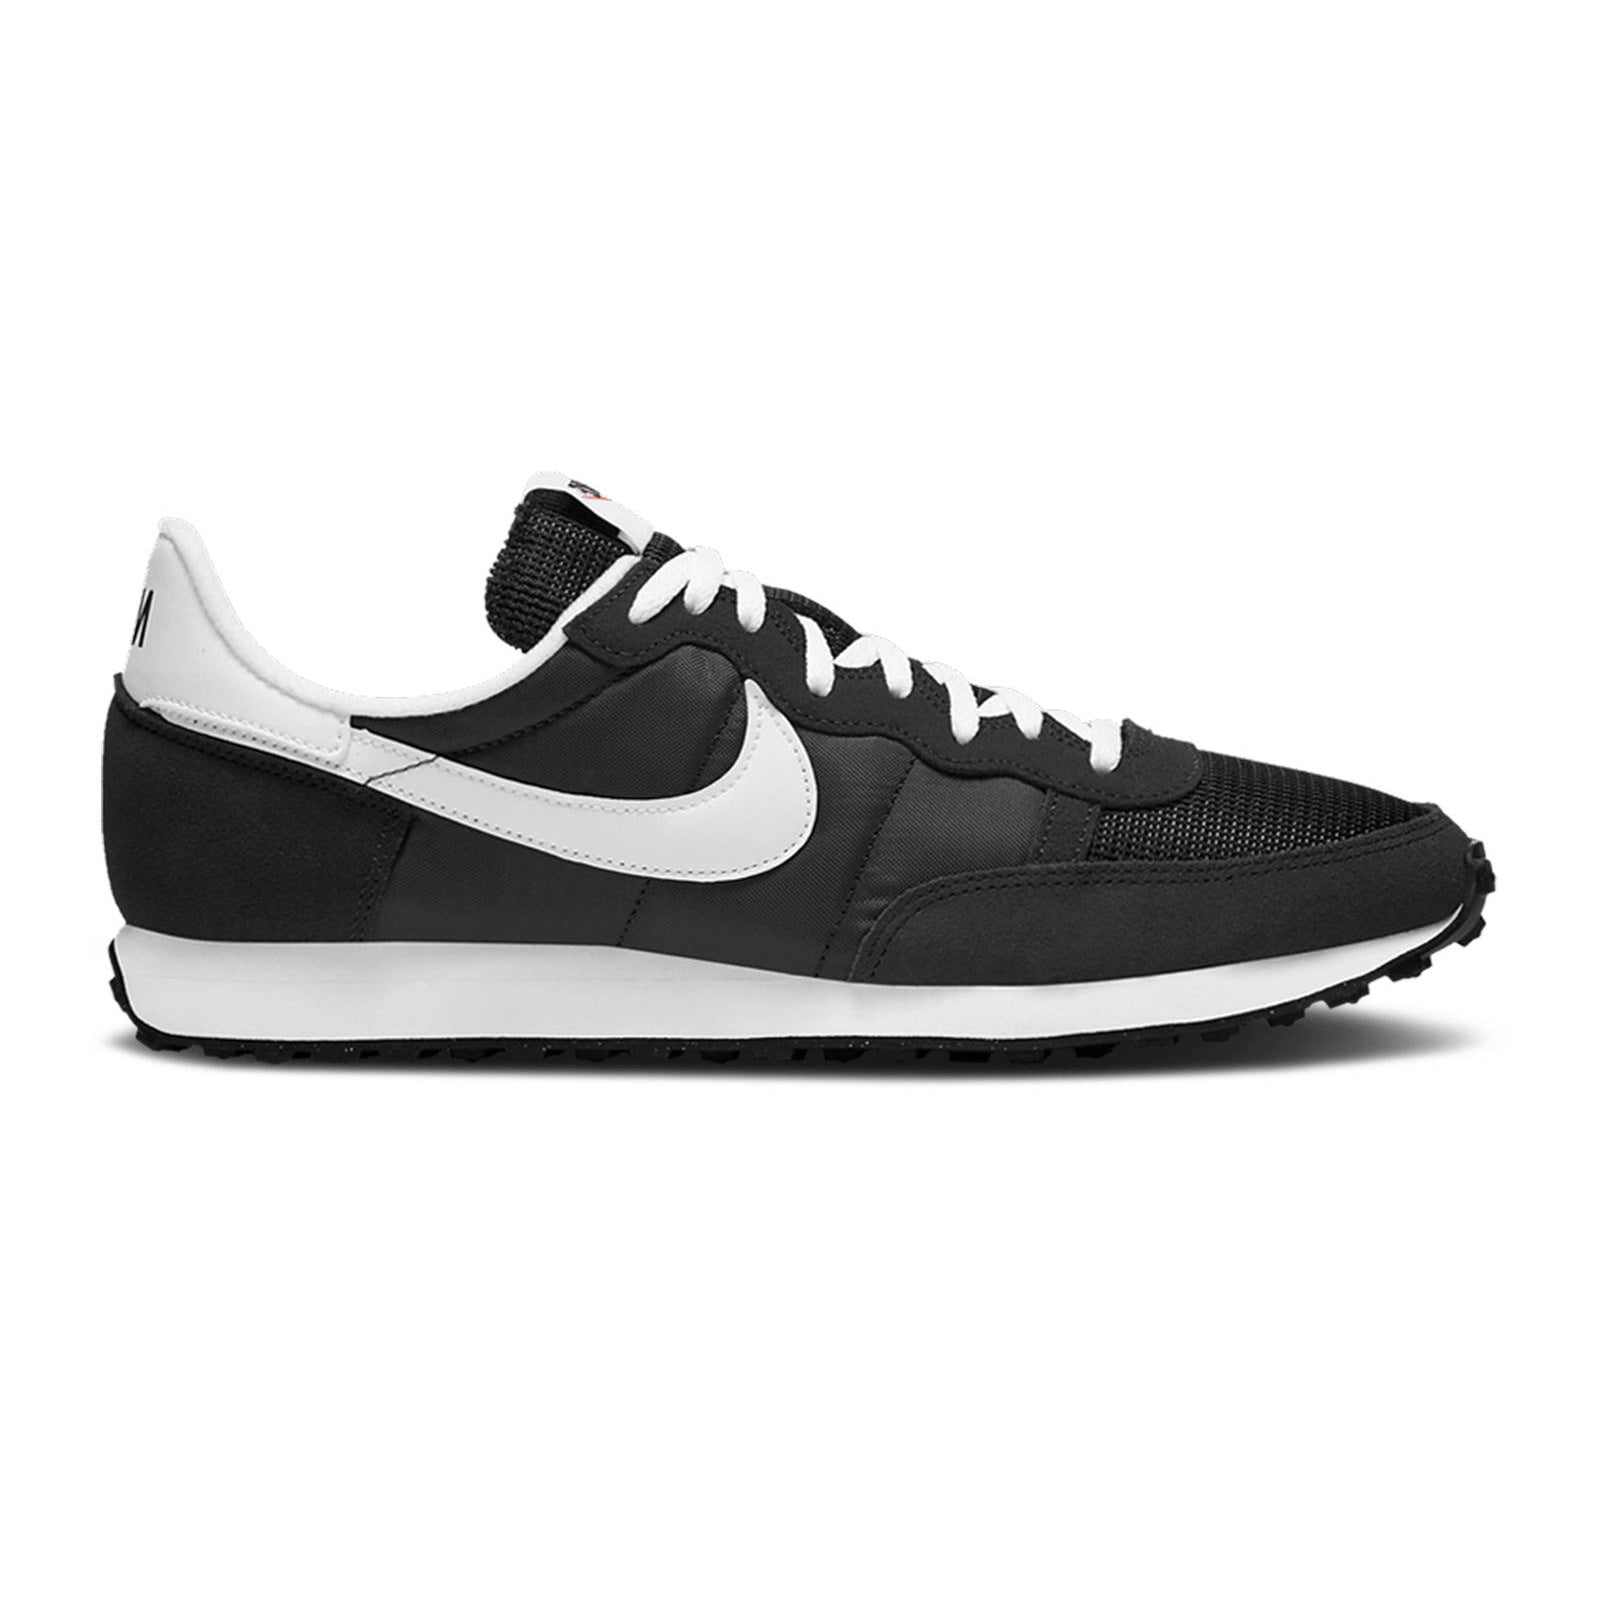 Nike Challenger OG Black White CW7645-002 Men's Sneakers Size 10 profile view